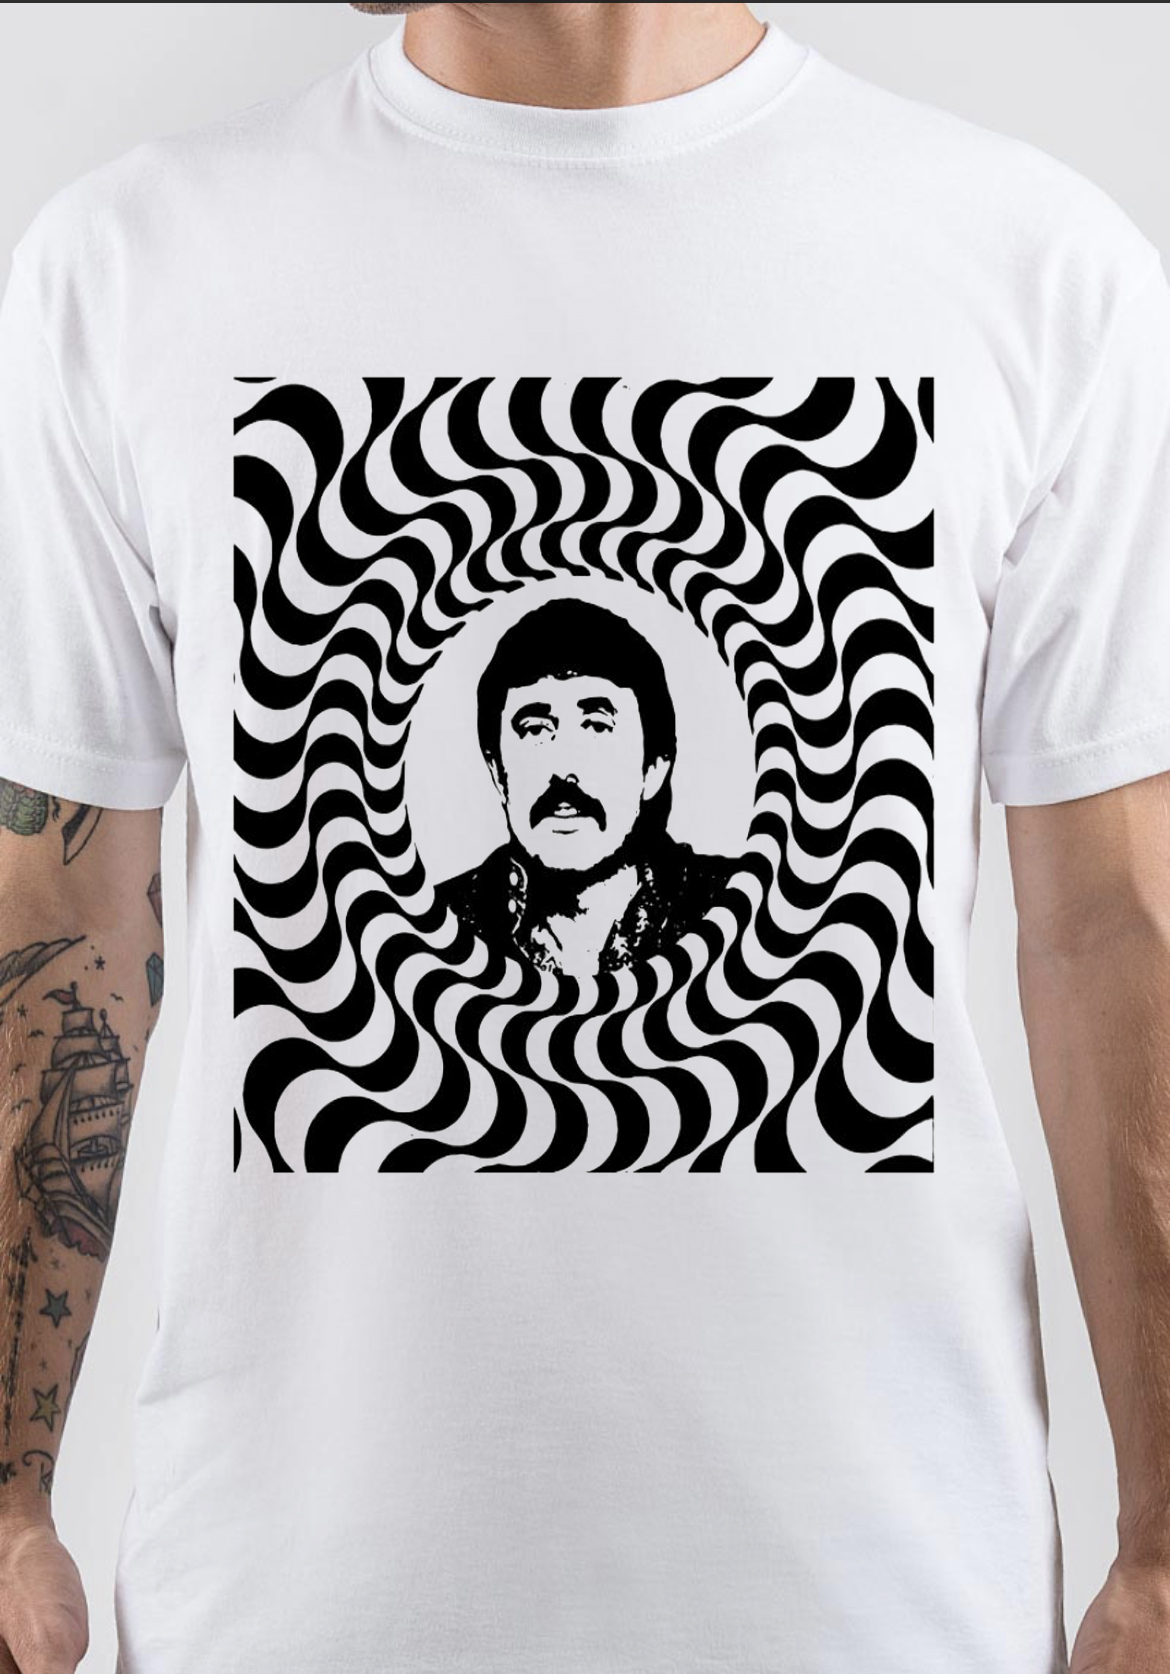 Lee Hazlewood T-Shirt And Merchandise